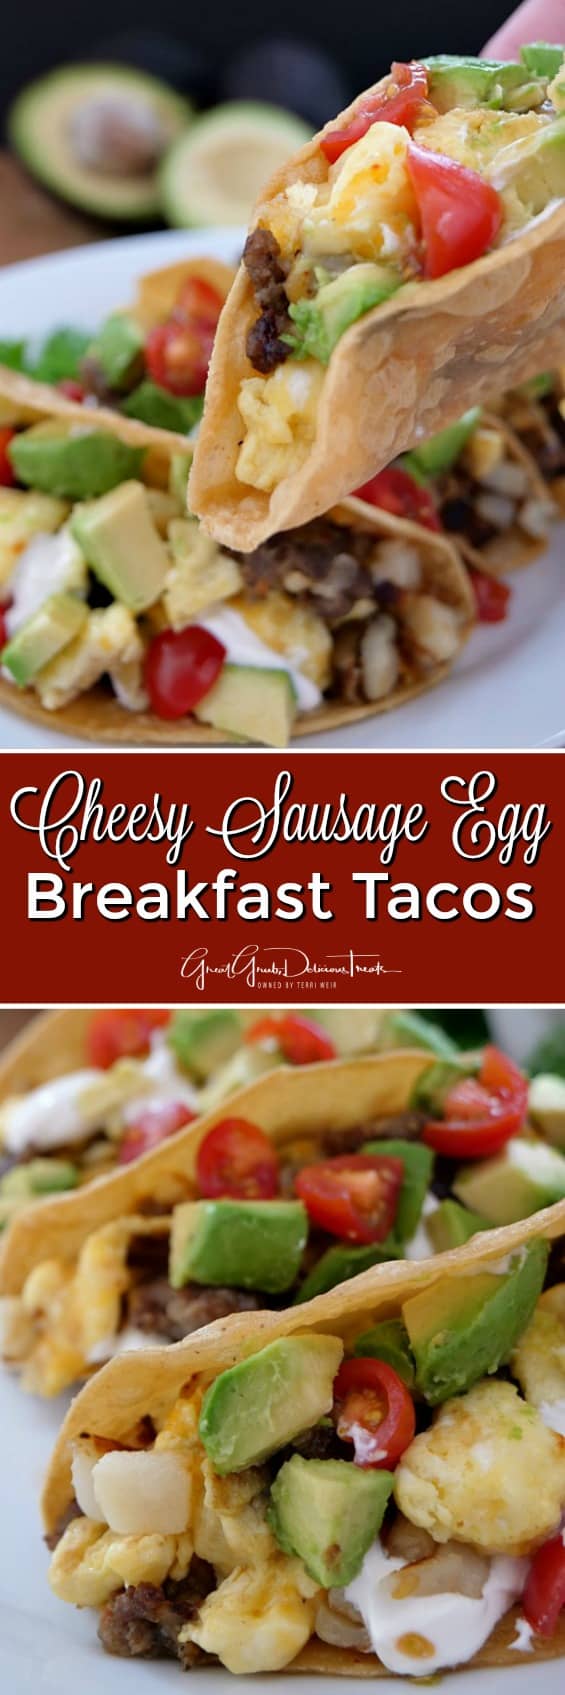 Cheesy Sausage Egg Breakfast Tacos